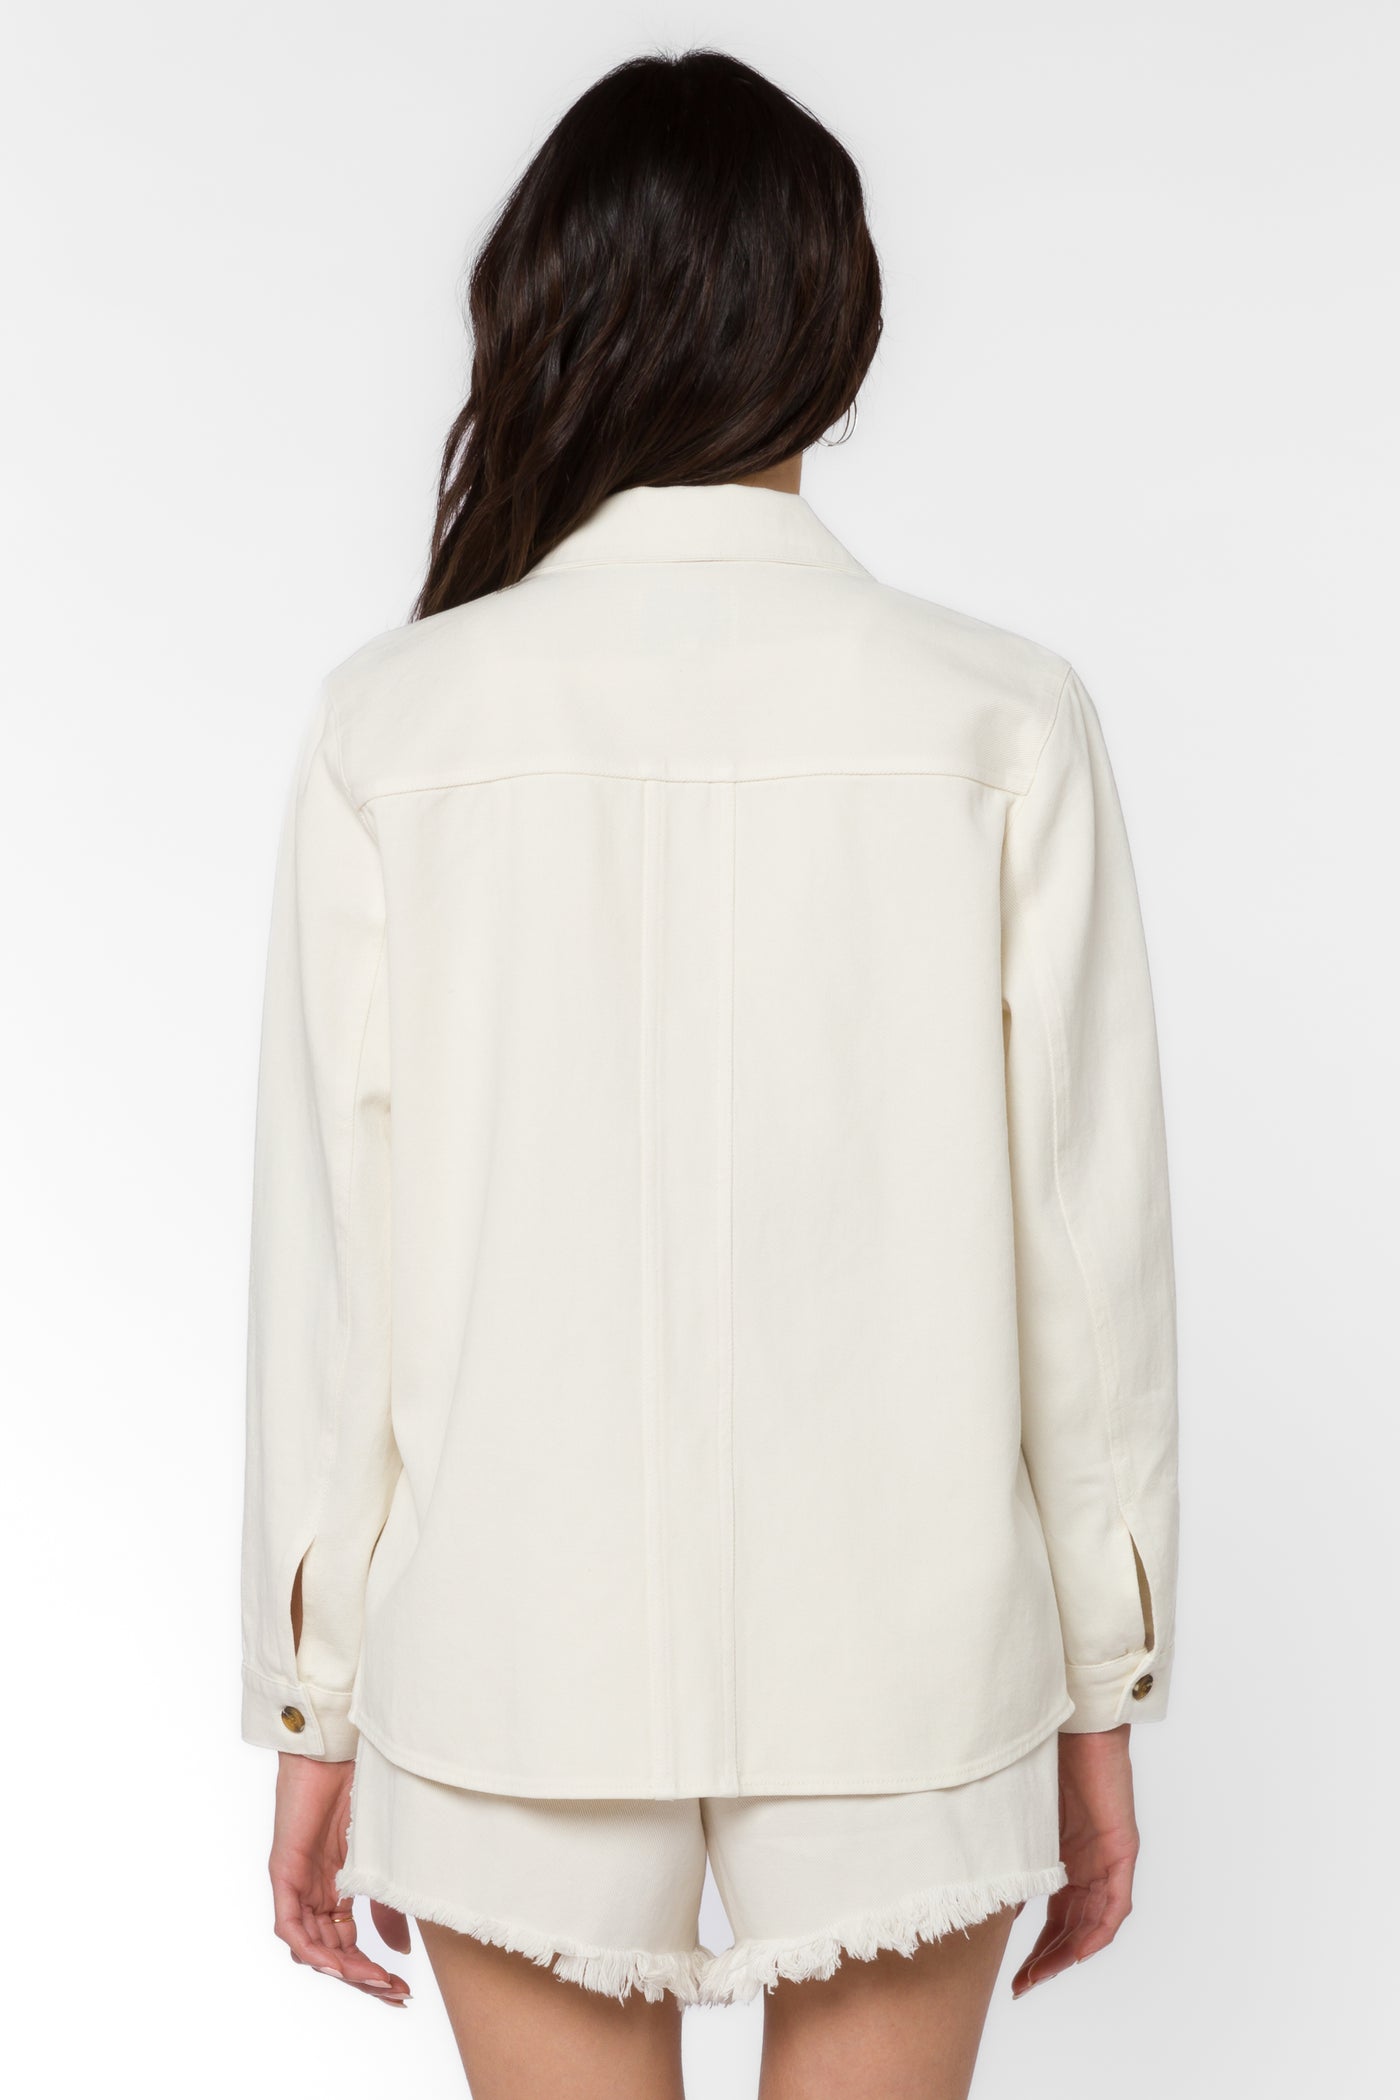 Astrid Ivory Denim Jacket - Jackets & Outerwear - Velvet Heart Clothing